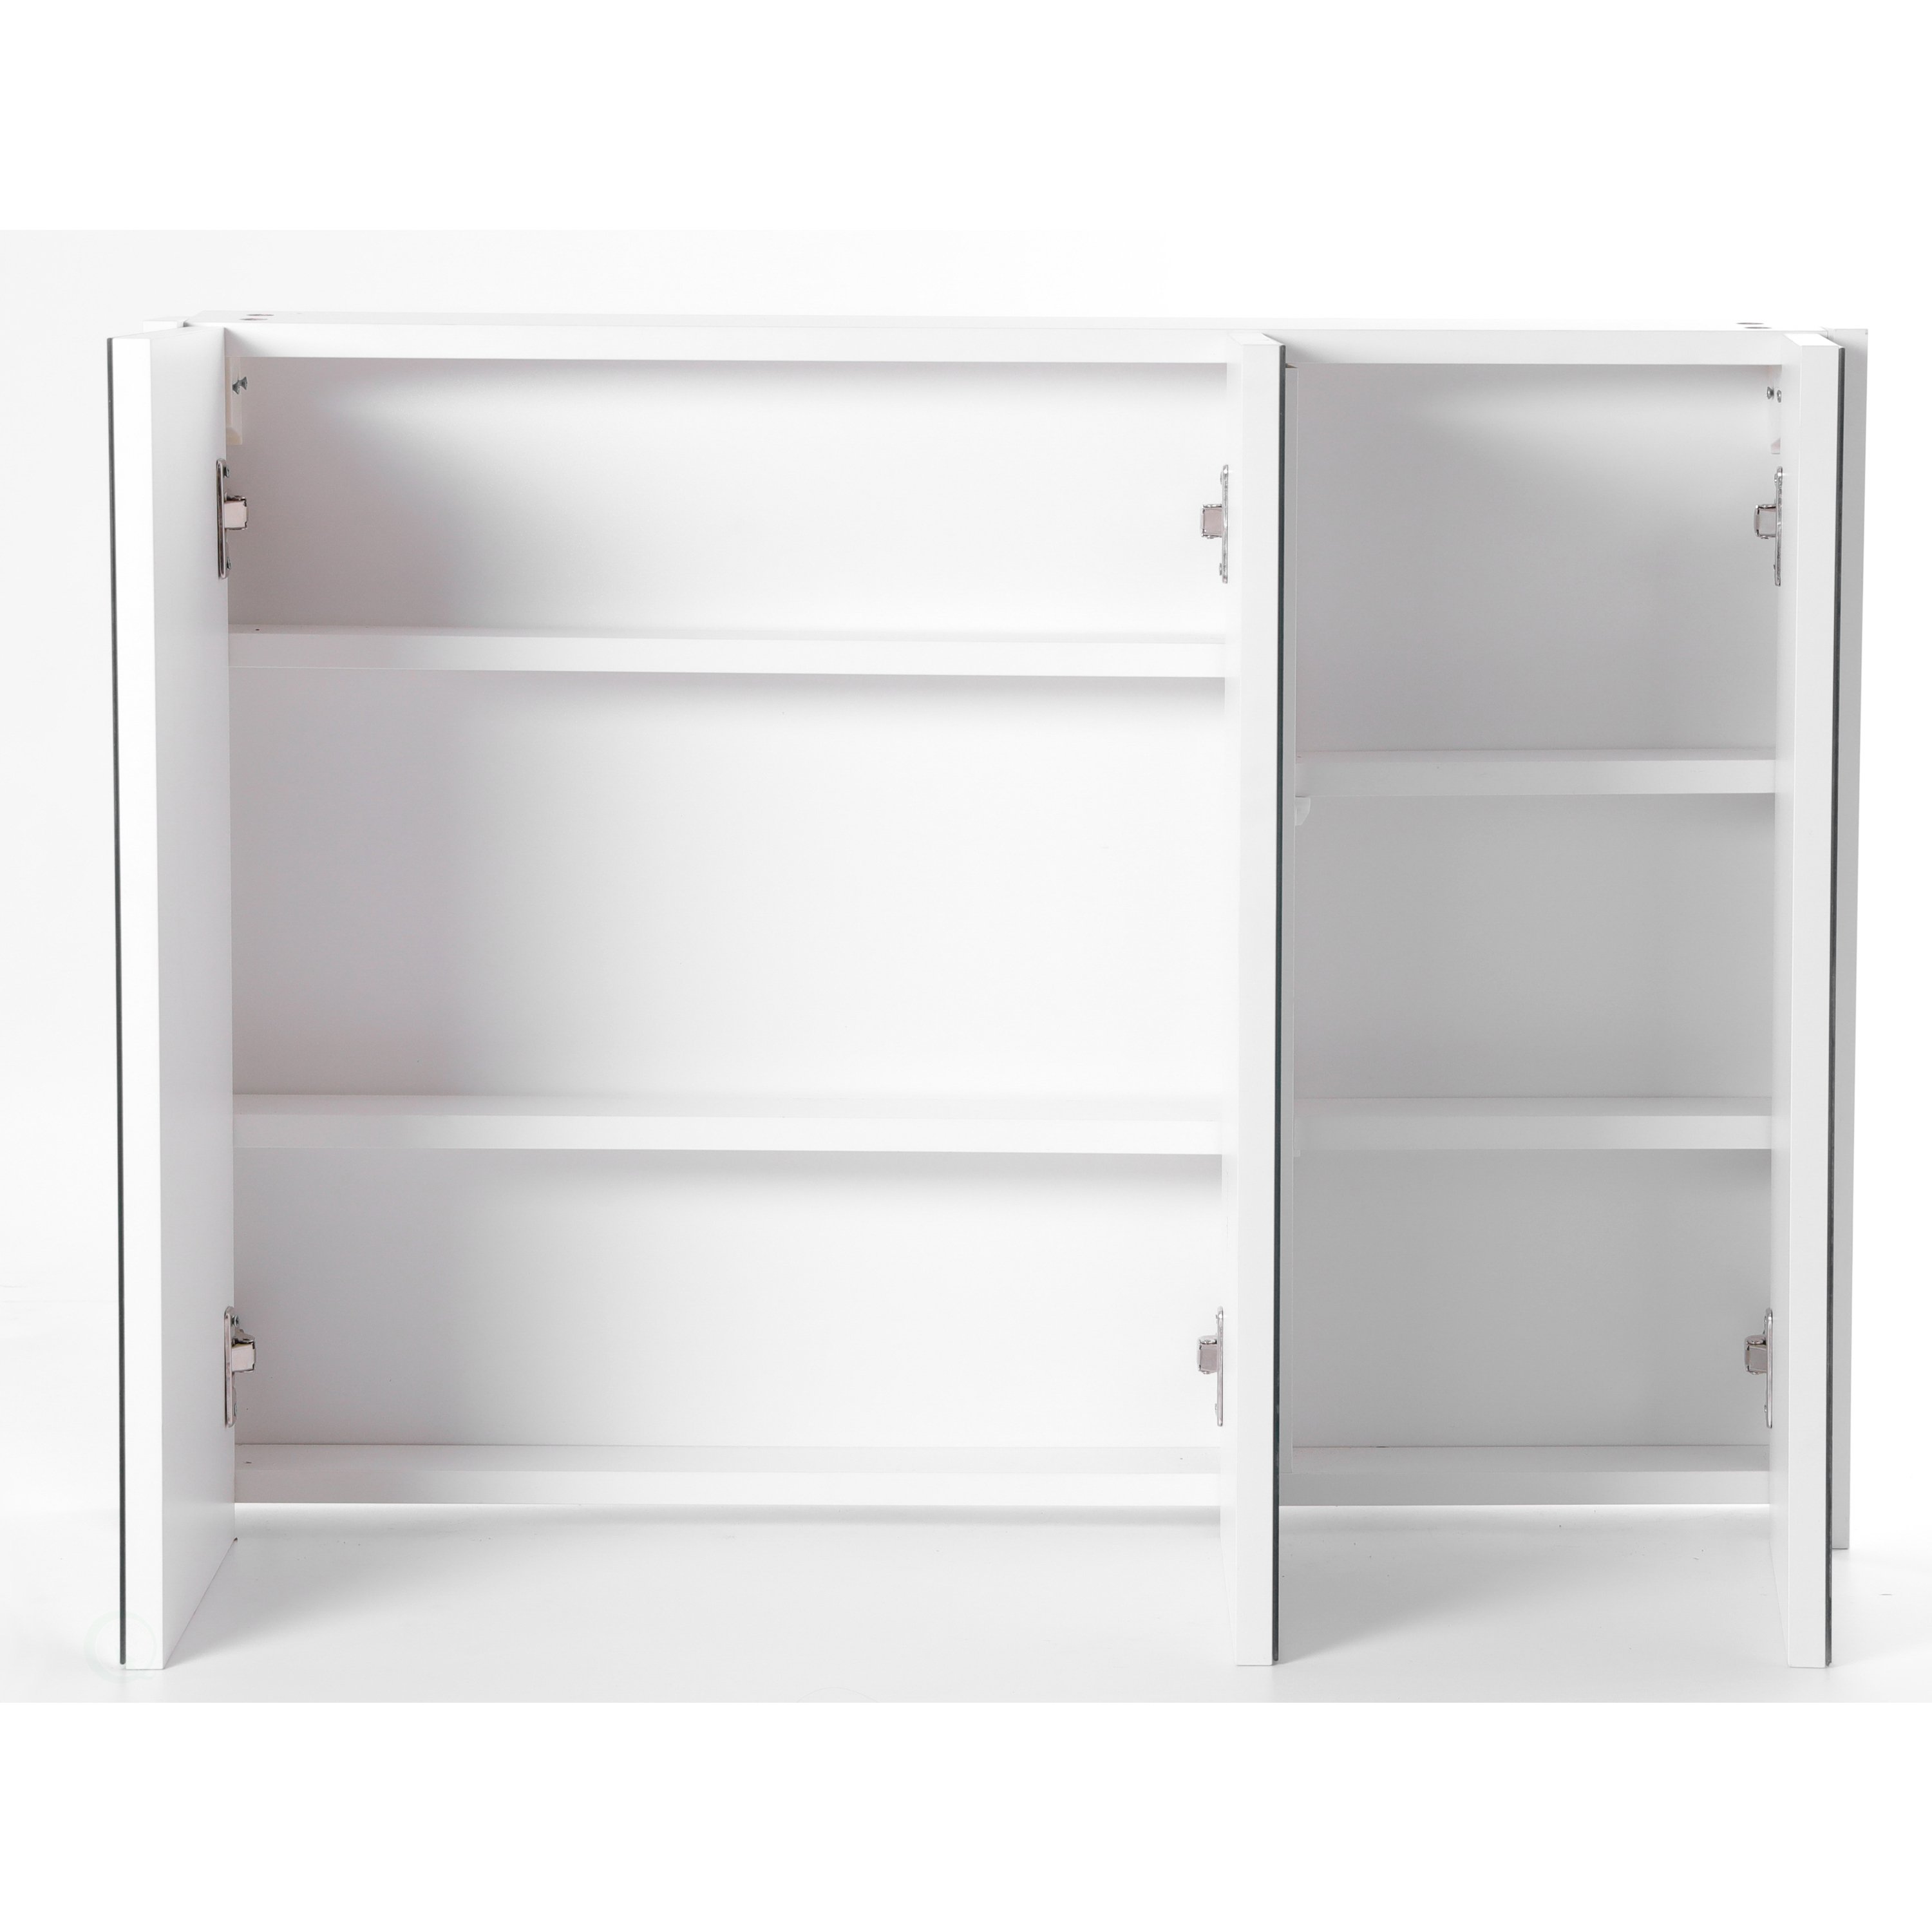 3 Shelves White Wall Mounted Bathroom Powder Room Mirrored Door Vanity Cabinet Medicine Chest